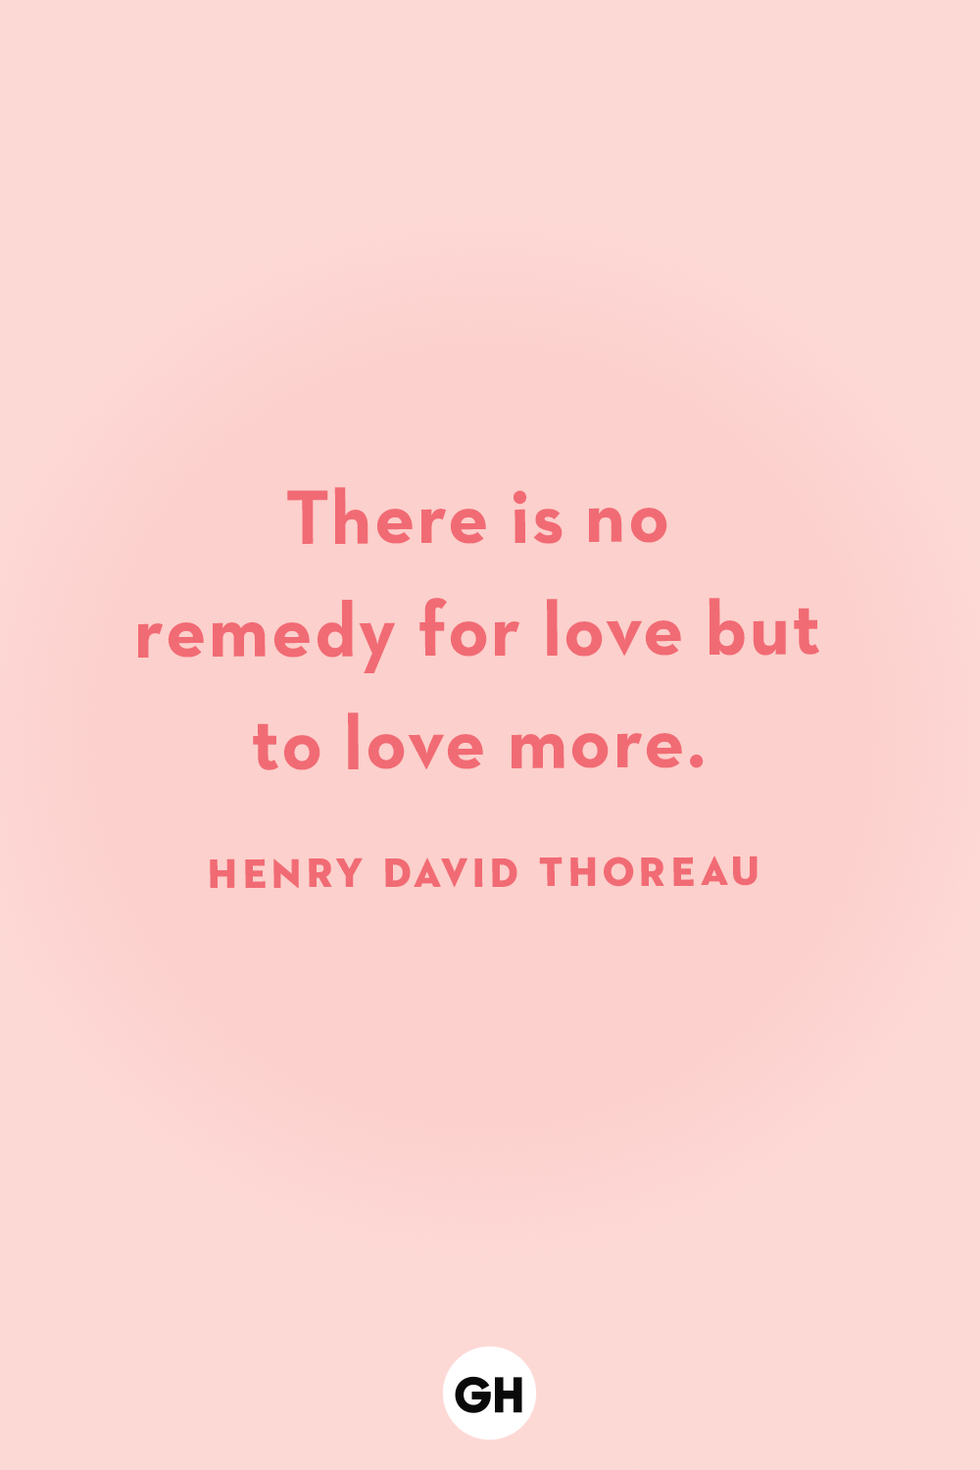 True Love? – Some musings